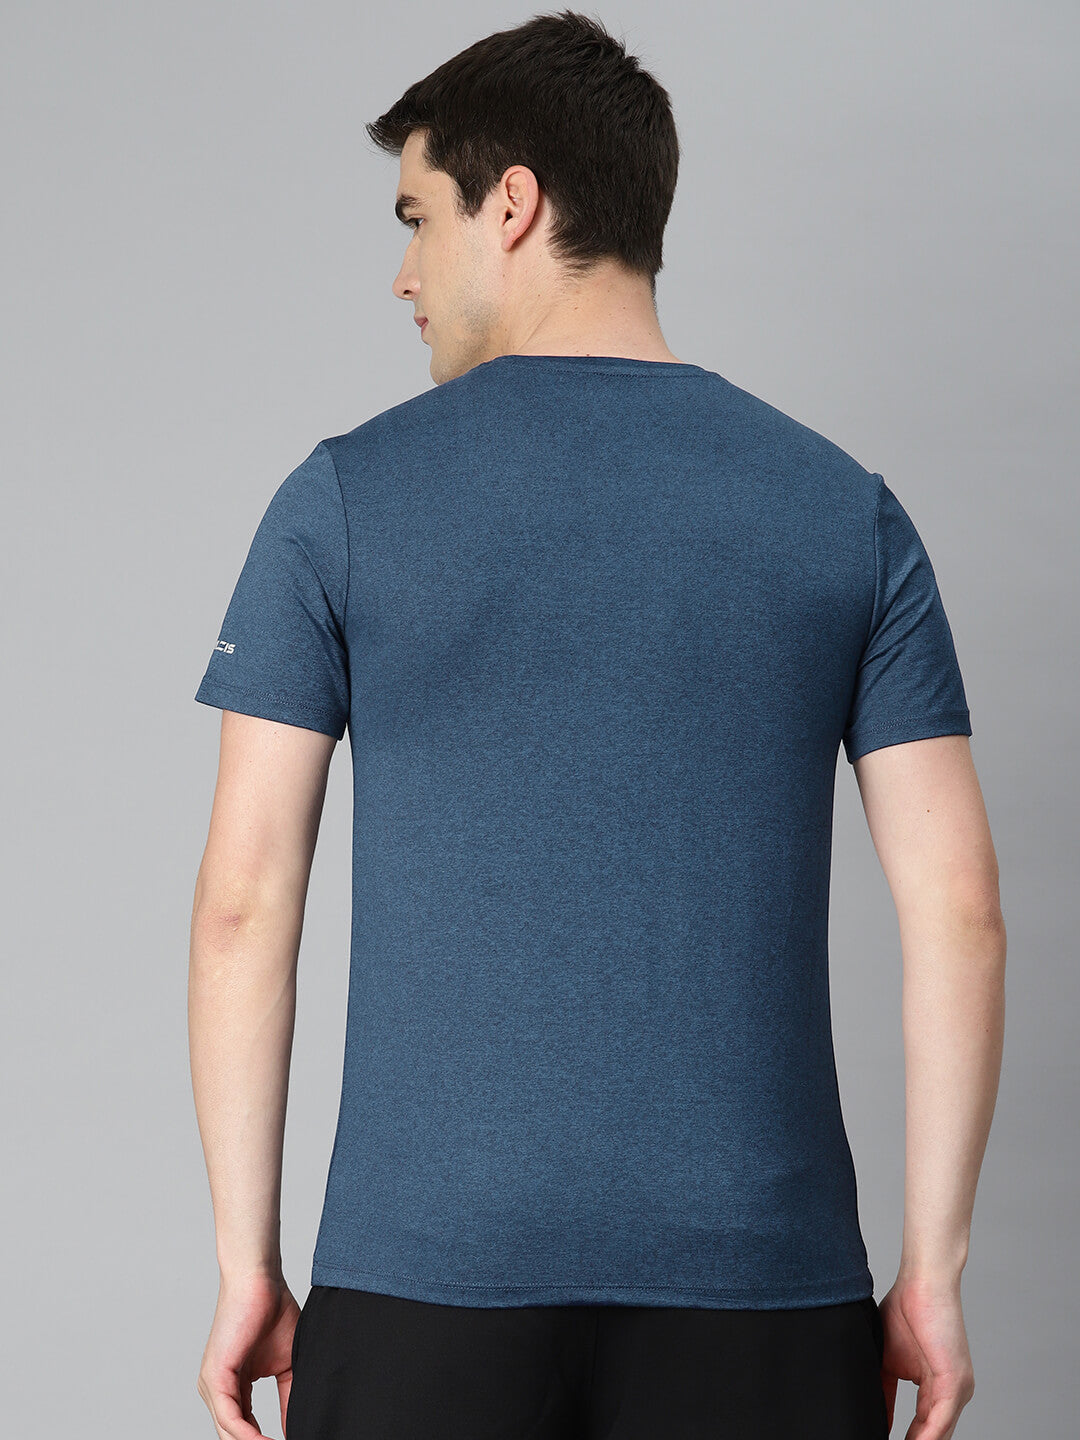 Alcis Men Navy Blue Typography Printed Anti Static Slim Fit Sports T-shirt